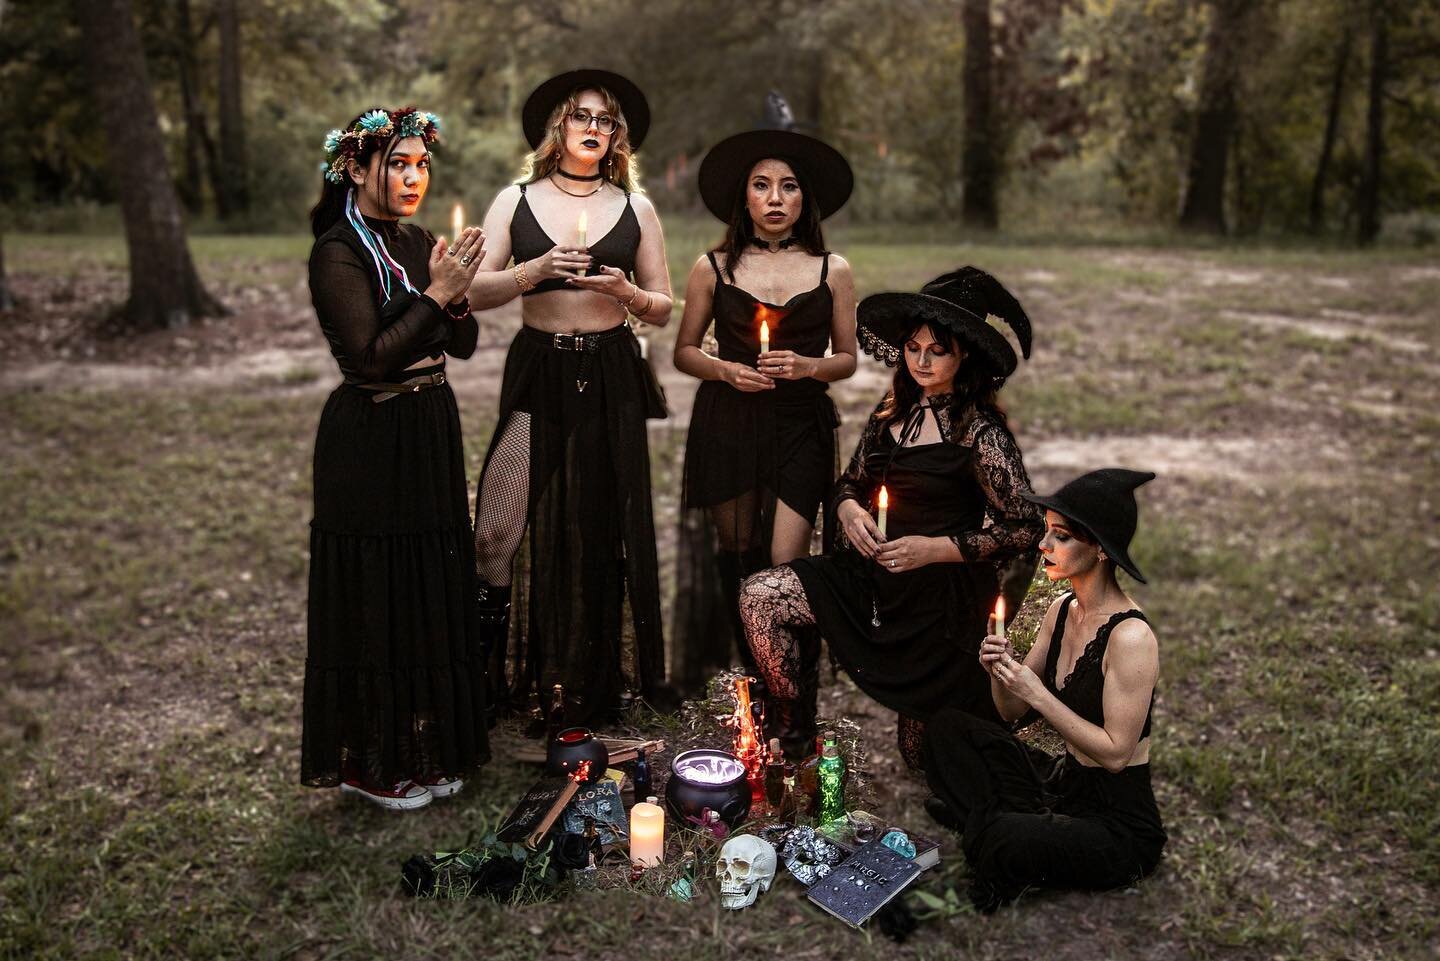 &lsquo;Tis the Season of the Witch 🔮 #witchvibes #halloween 
📸 @hannahsturphoto